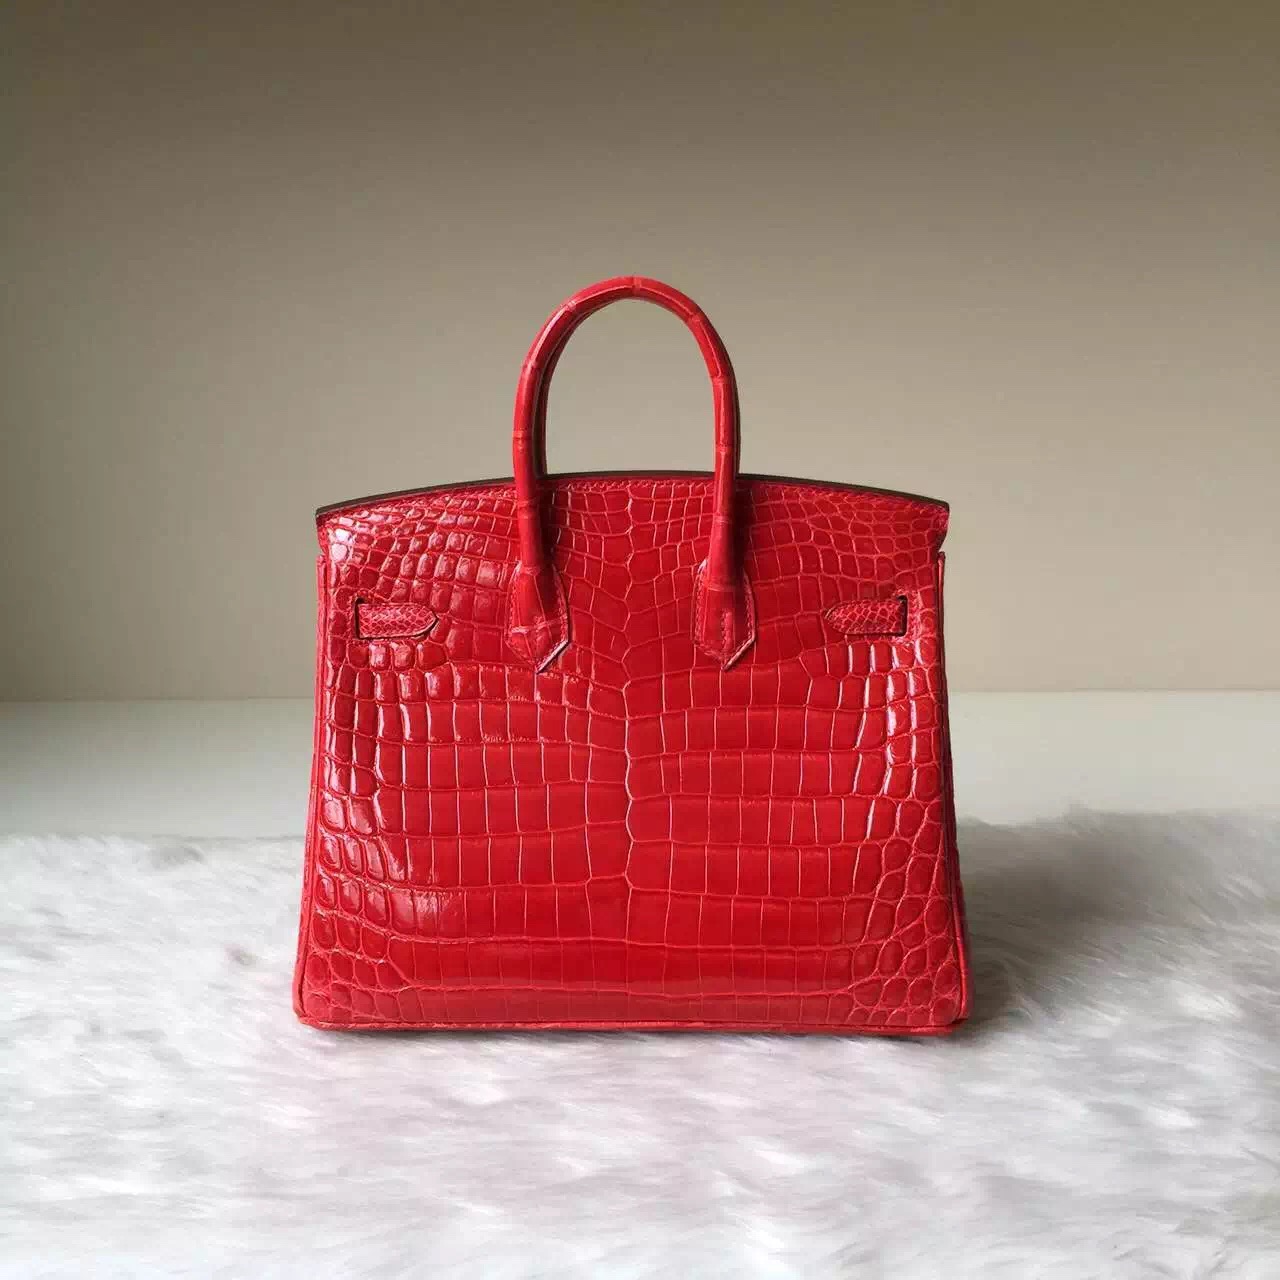 Wholesale Hermes Crocodile Shiny Leather Birkin Bag 25cm in CK95 Ferrari Red